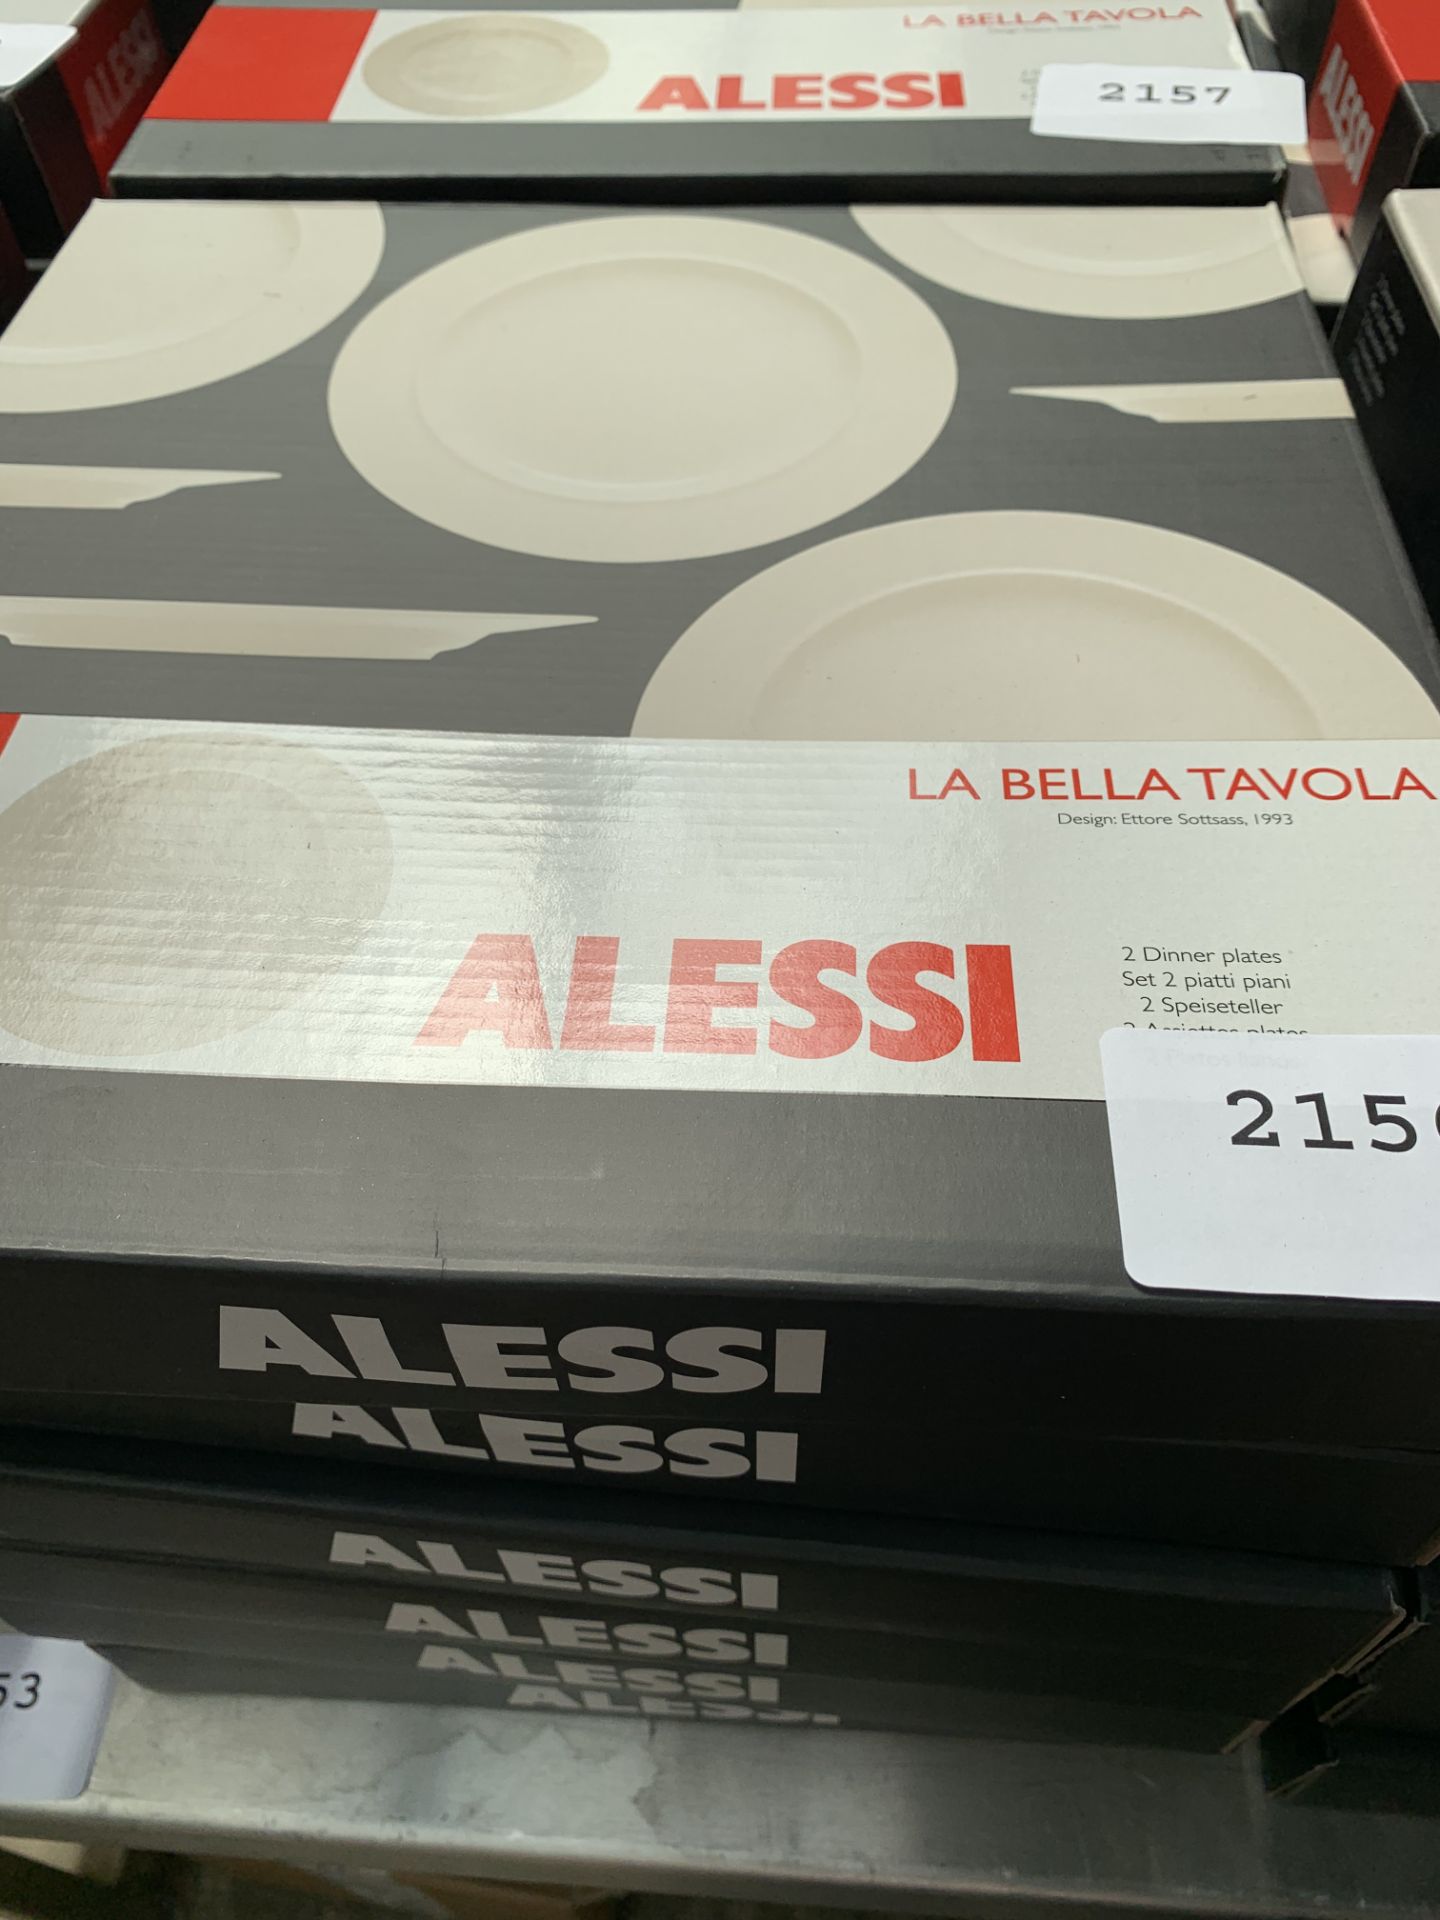 12 x Alessi dinner plates.